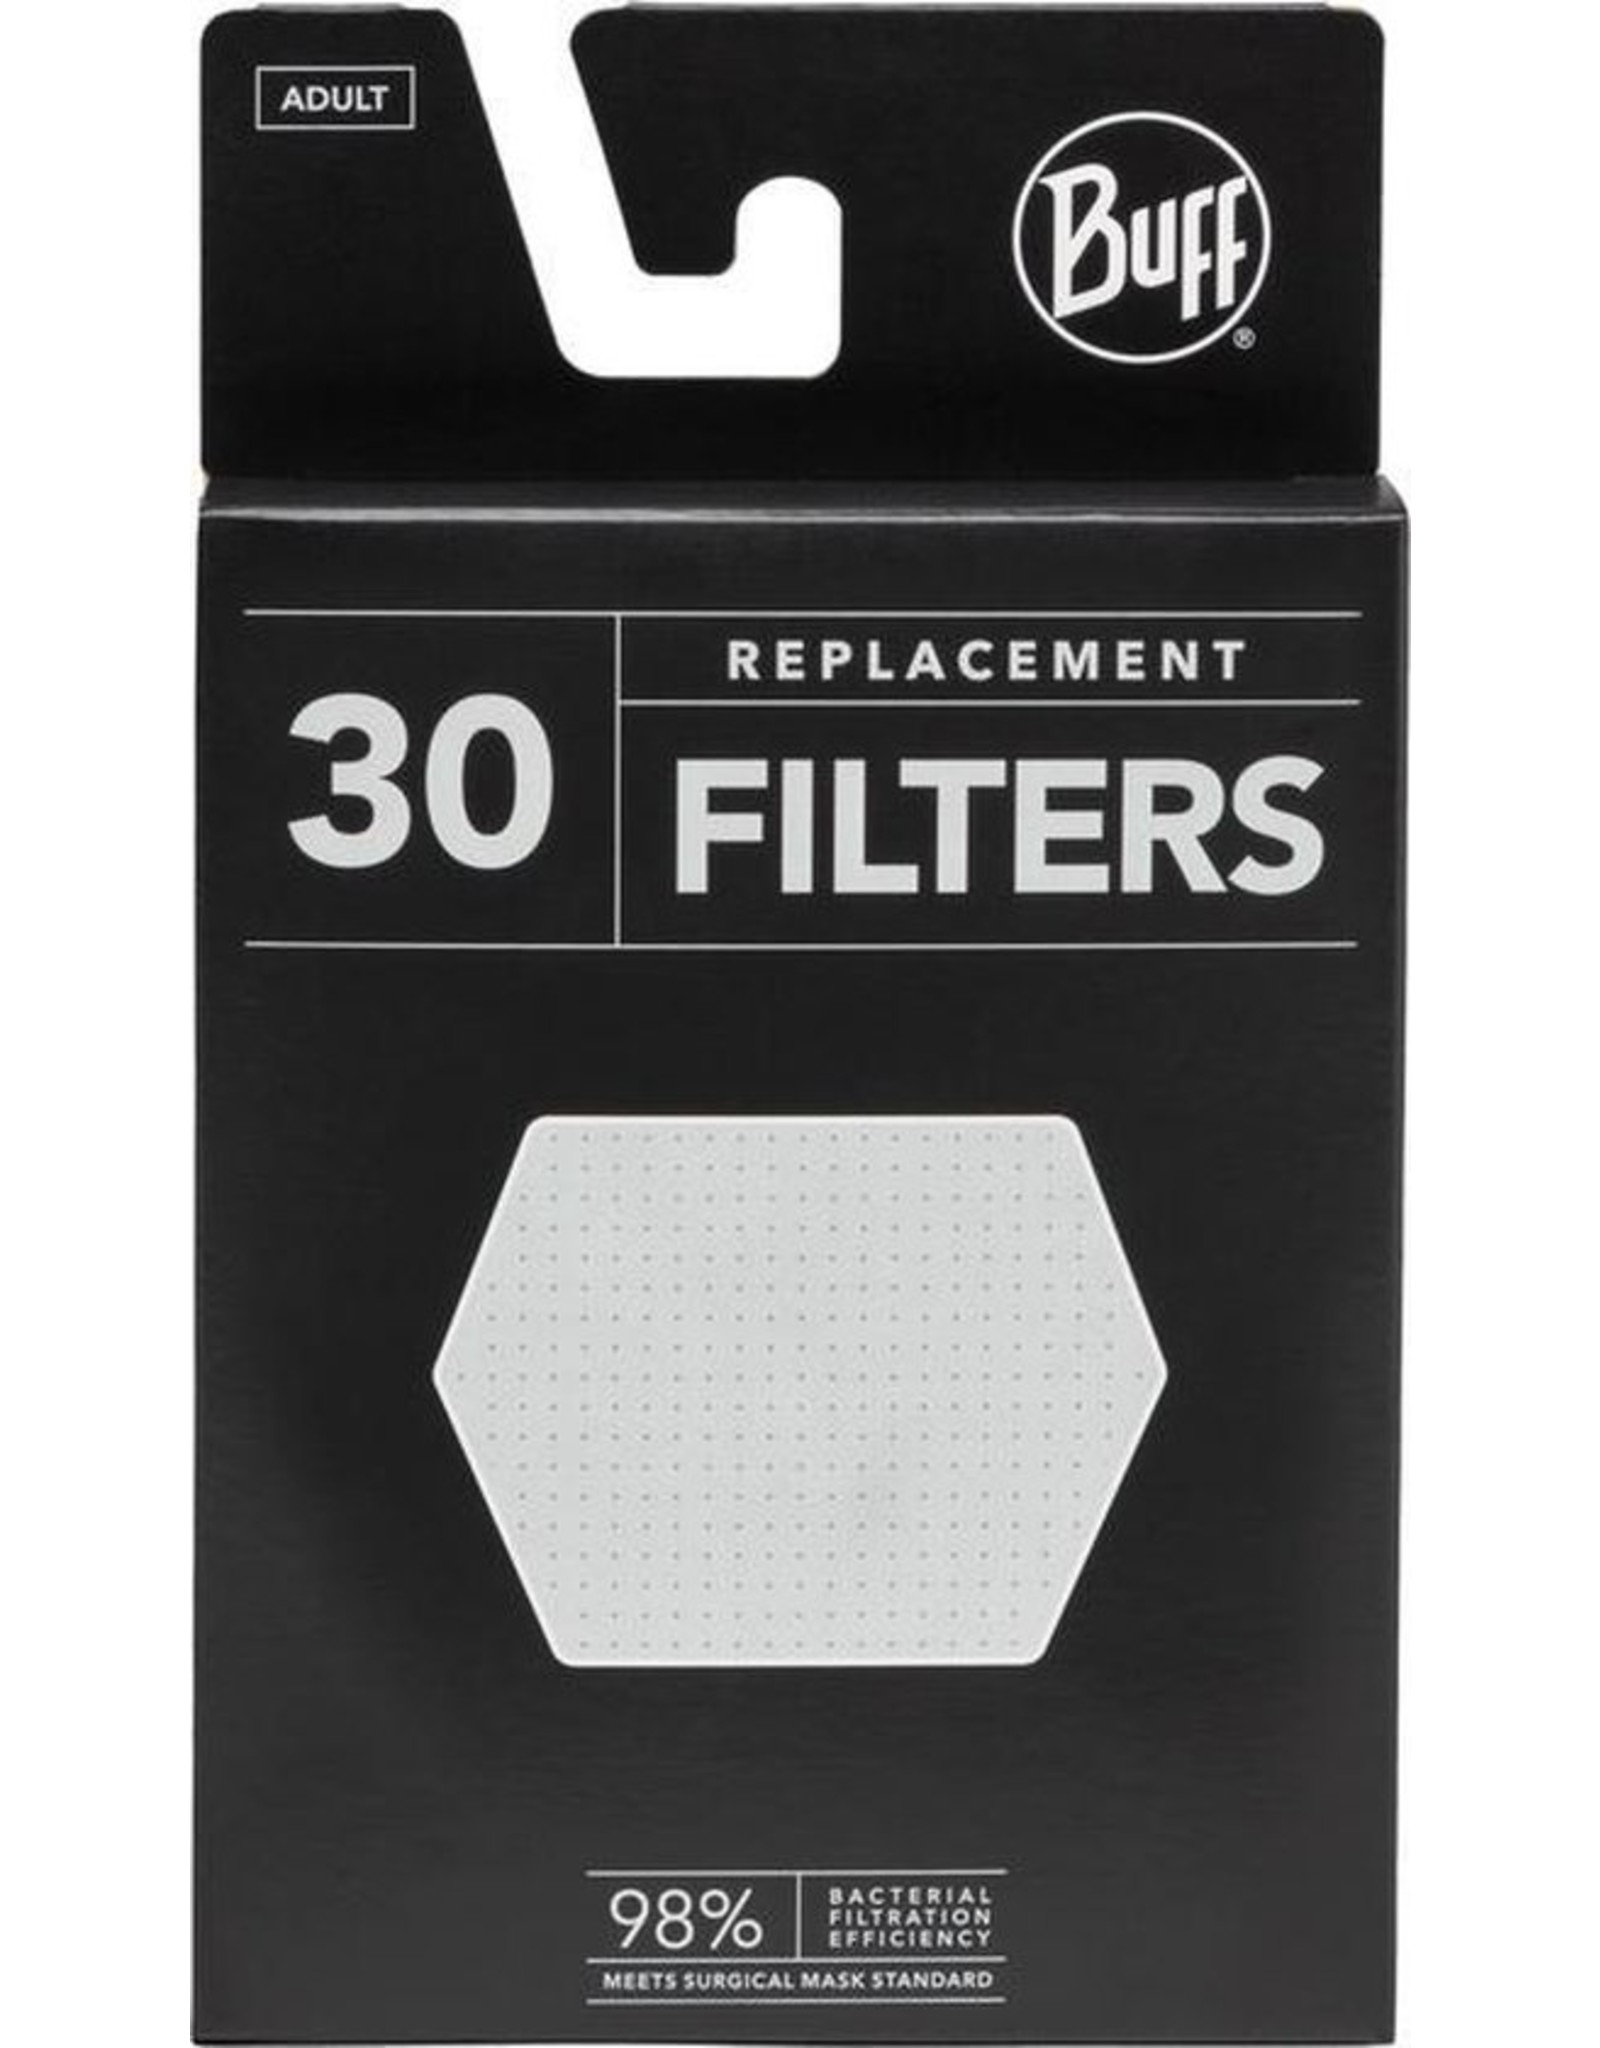 Buff Filter refill FM70/310 30 pack adults